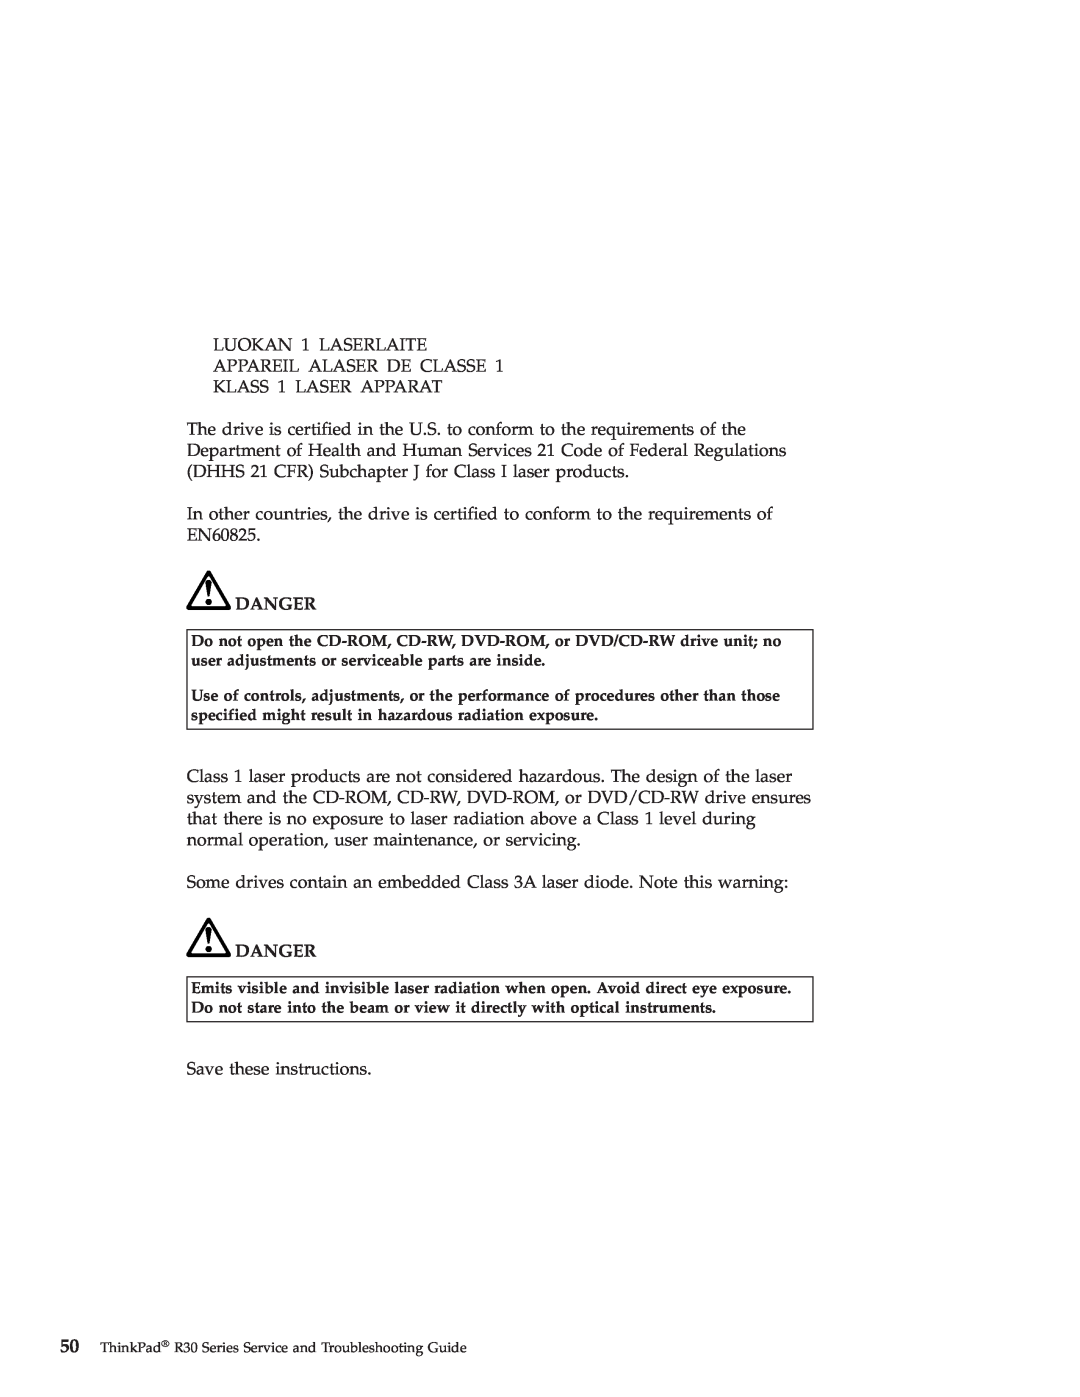 IBM R30 manual LUOKAN 1 LASERLAITE APPAREIL ALASER DE CLASSE KLASS 1 LASER APPARAT, Danger 